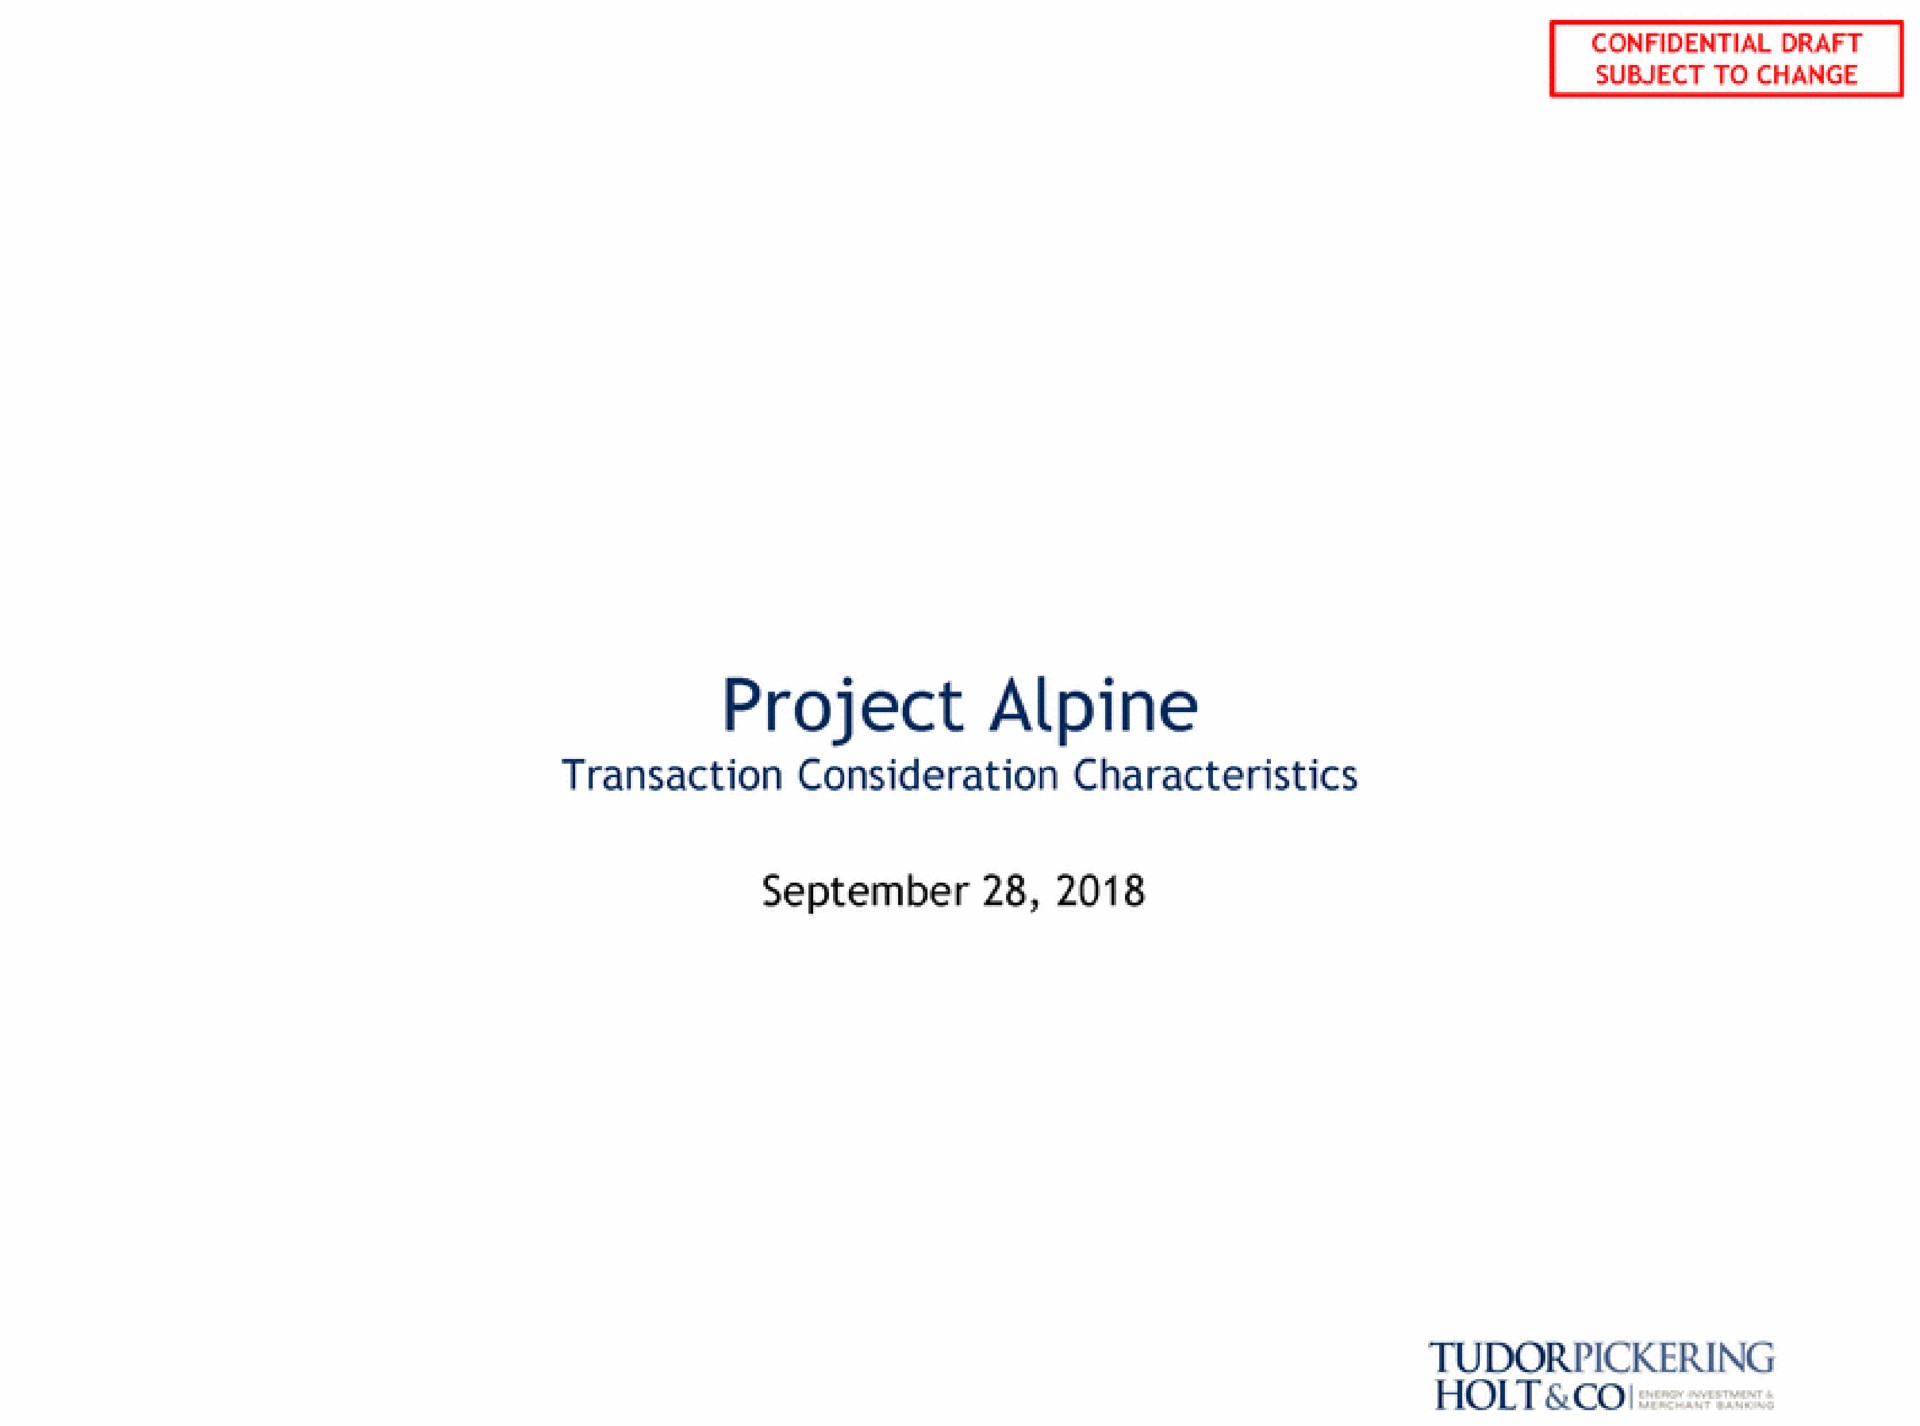 project alpine holt coo | Tudor, Pickering, Holt & Co